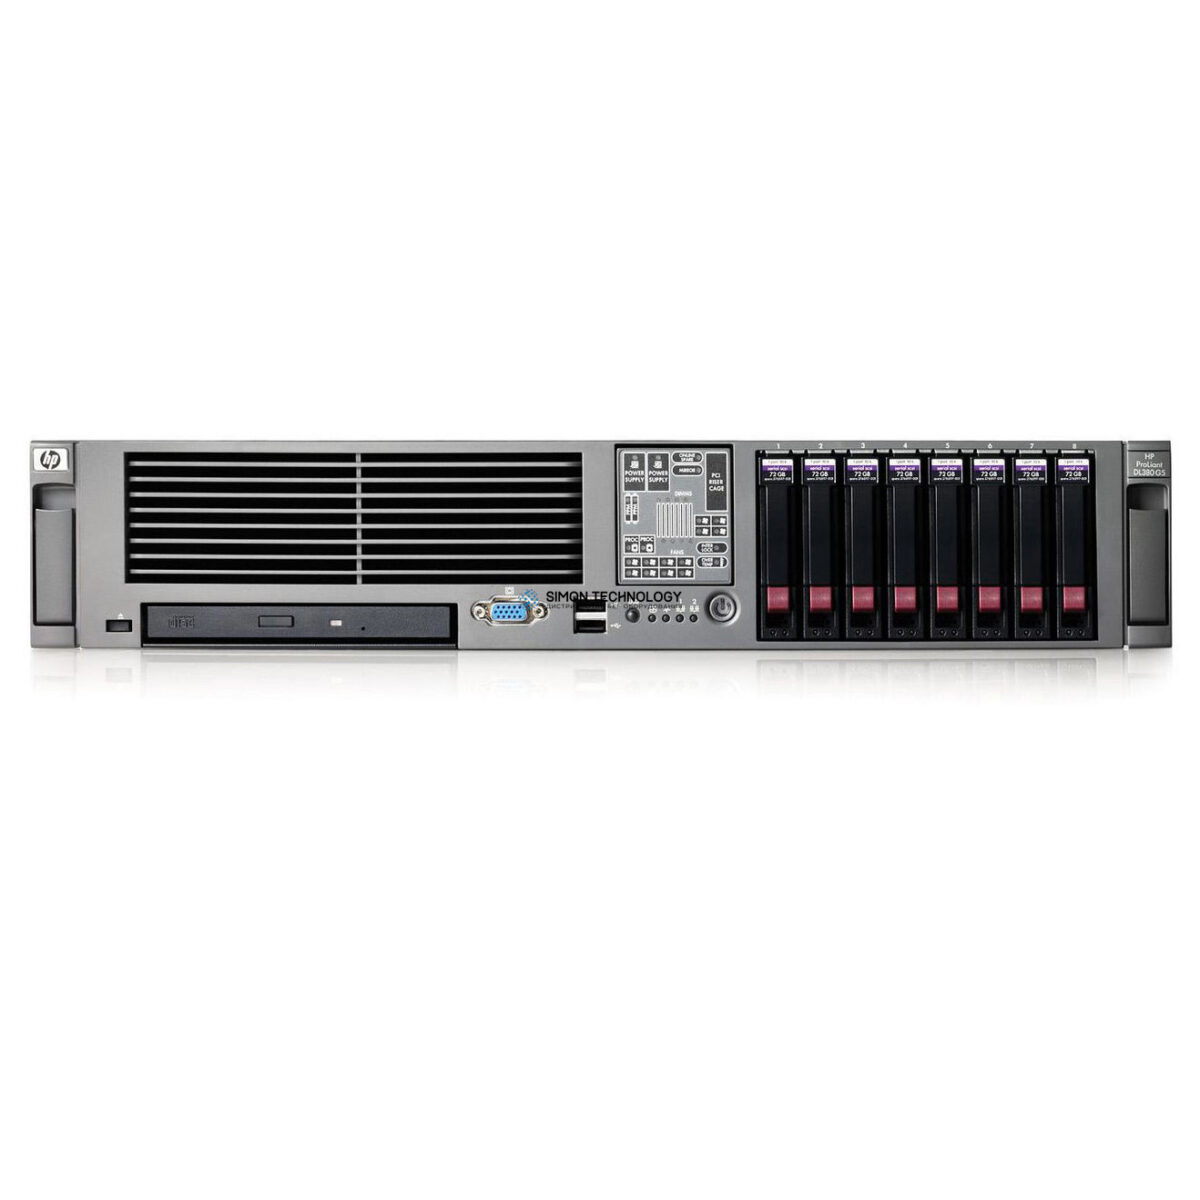 Сервер HP DL380 G5 E5420 2.50GHZ QC 2GB BASE RACK SVR (458567-421)